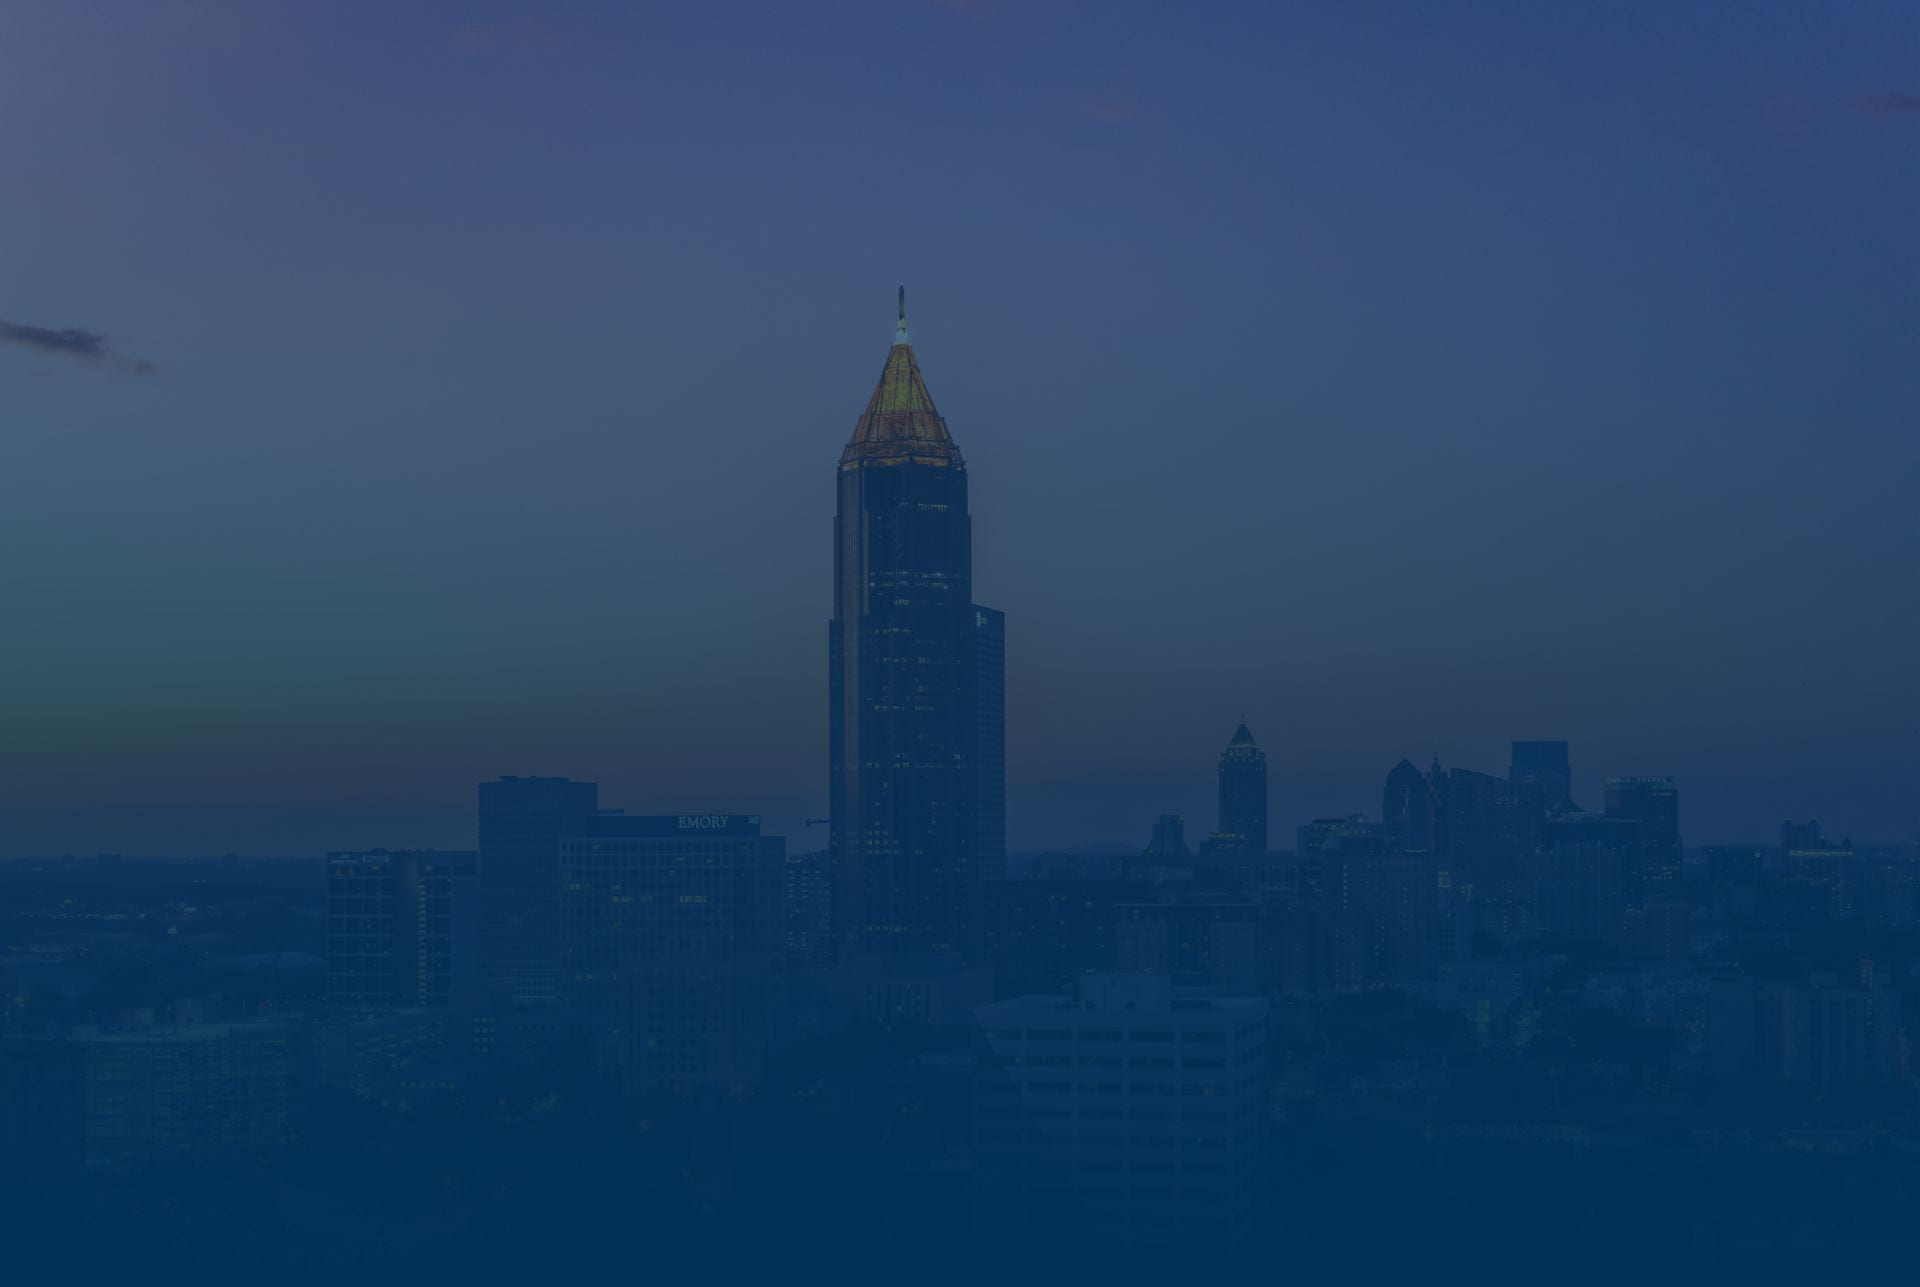 The Atlanta skyline.